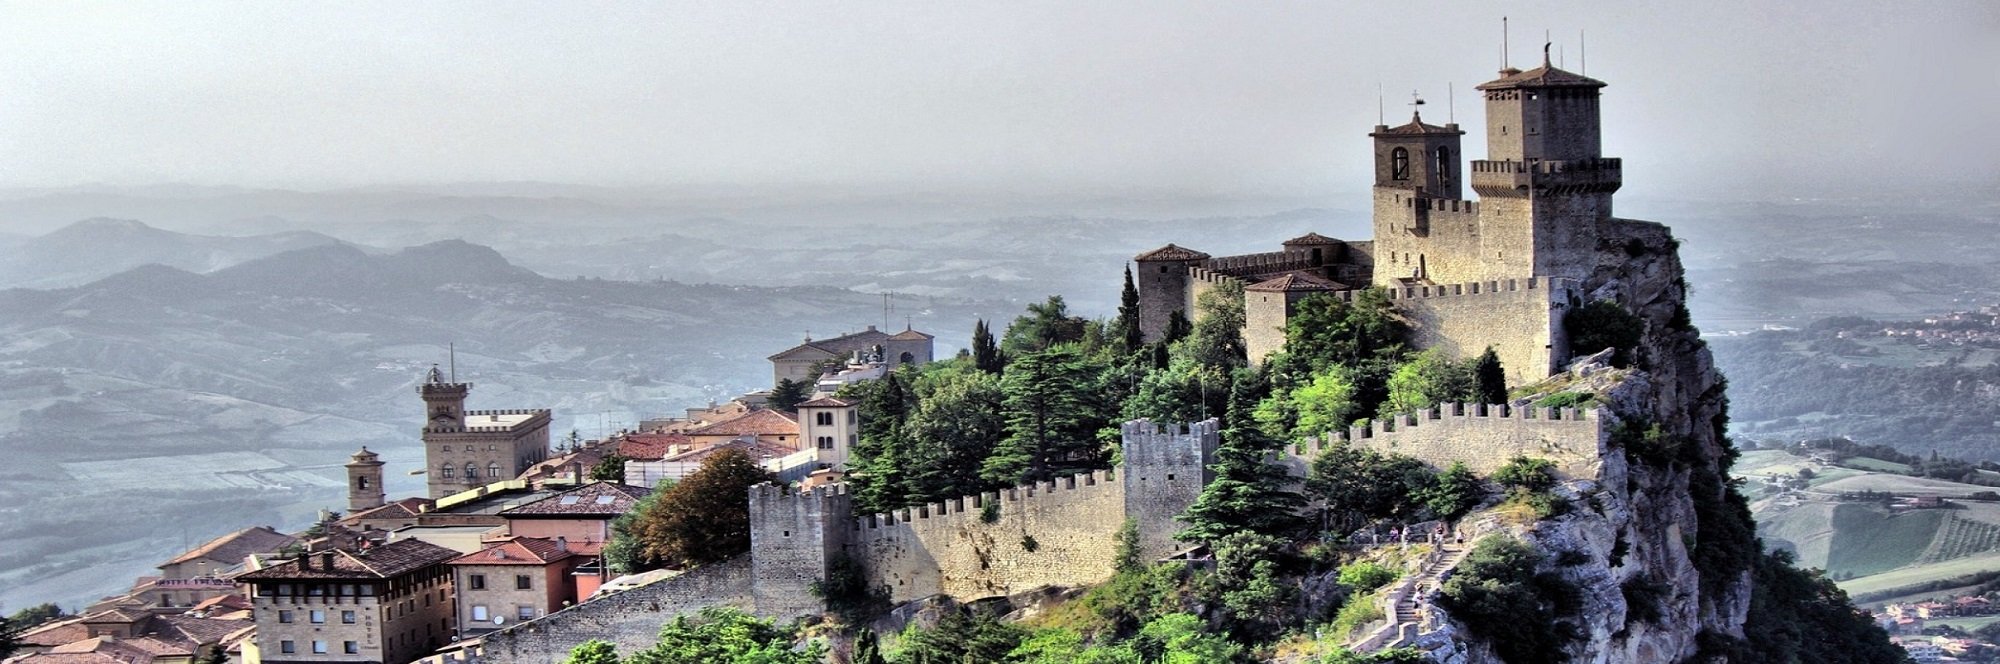 San Marino #1